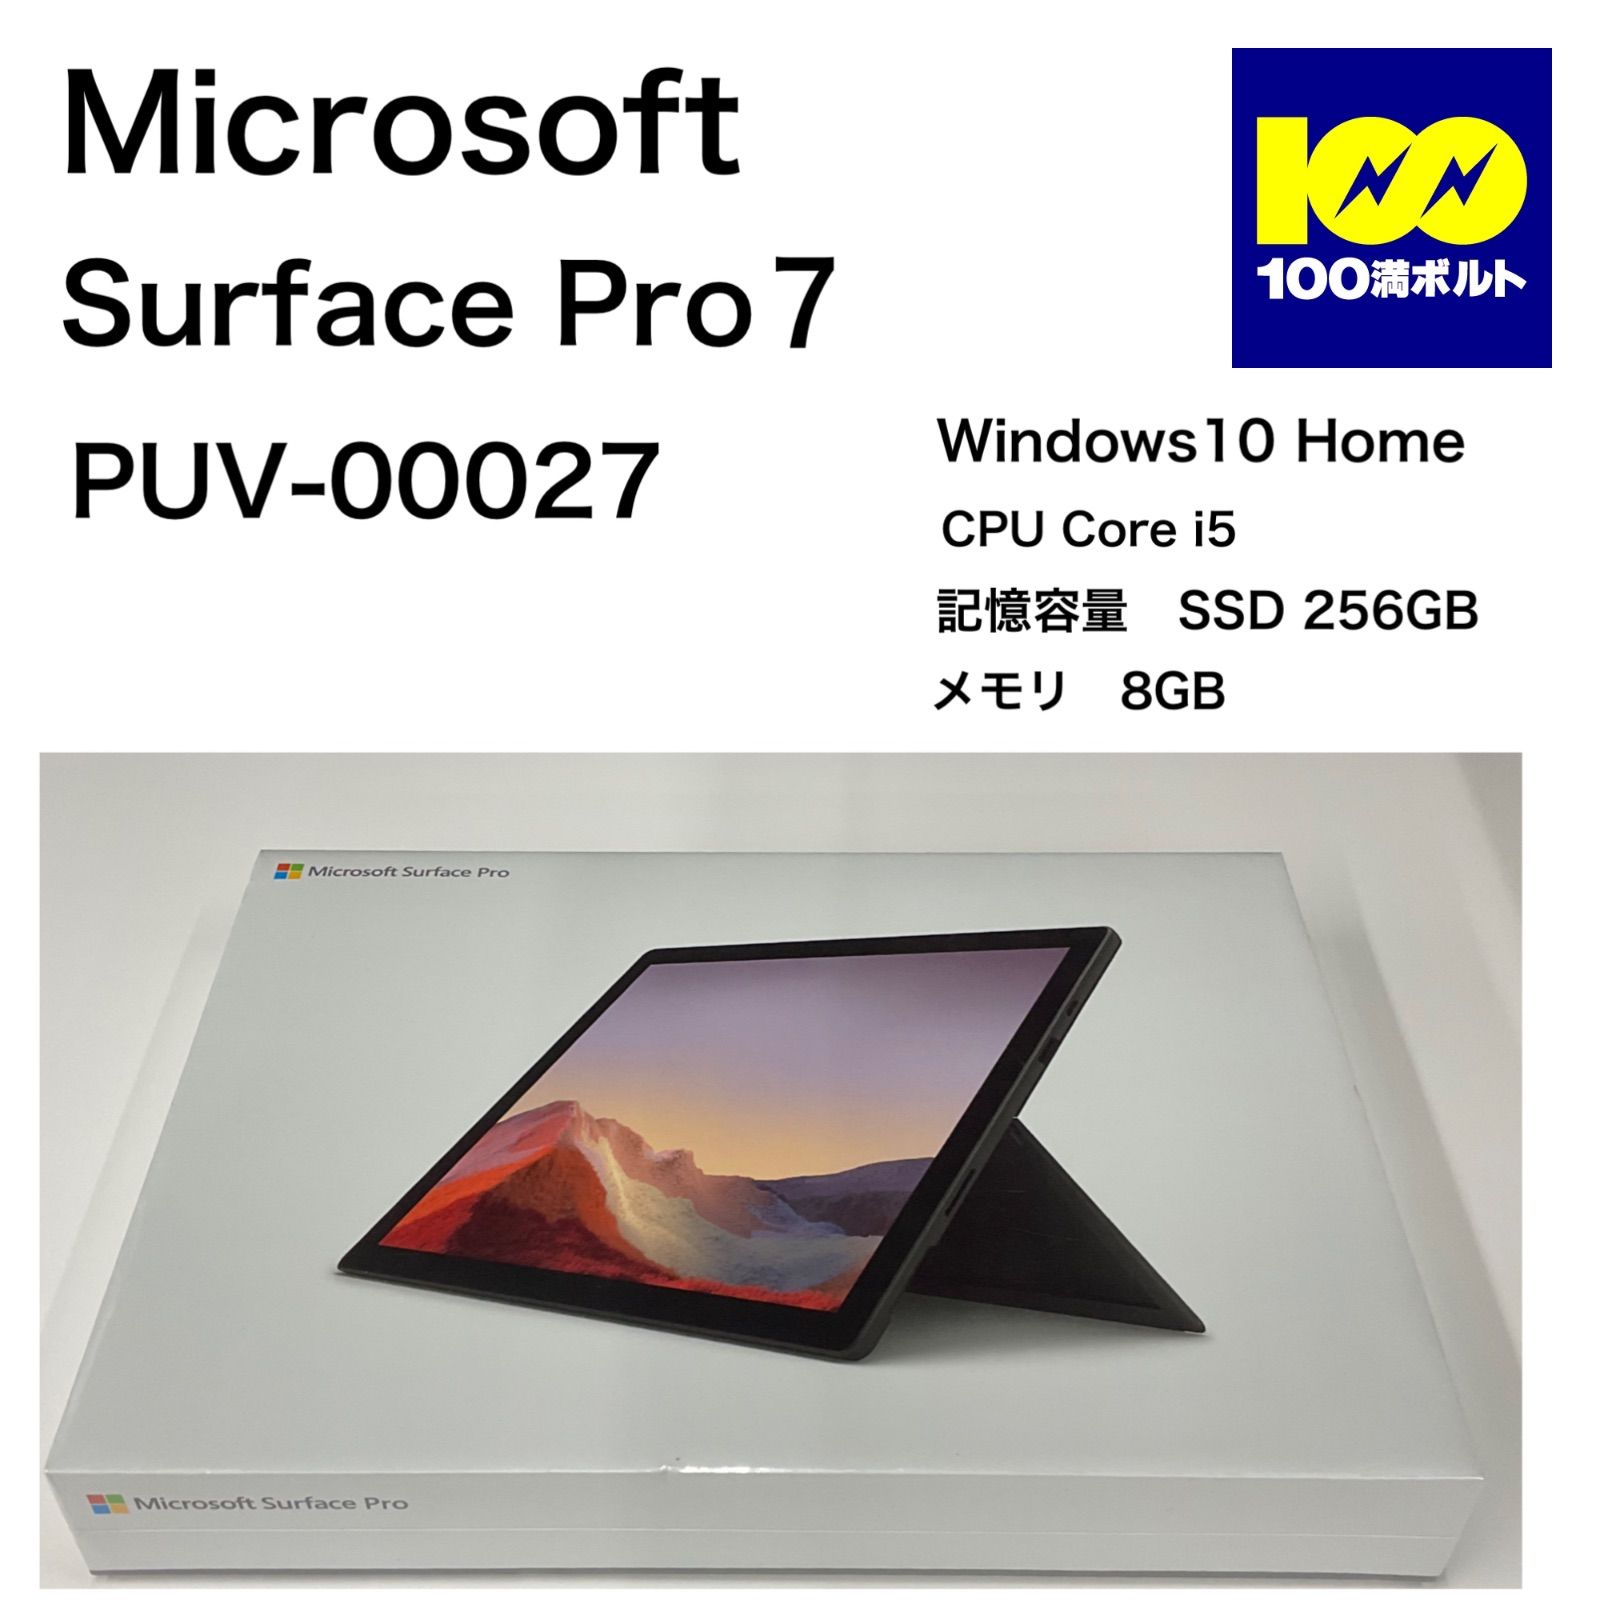 29120】Microsoft Surface Pro 7 PUV-00027 - 家電量販店 100満ボルト